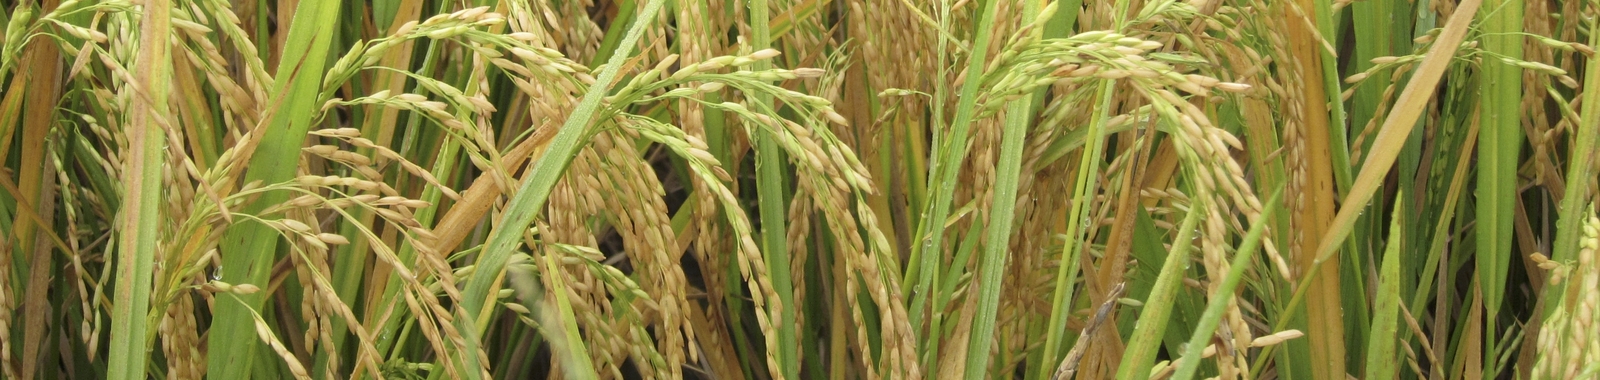 World Rice Production